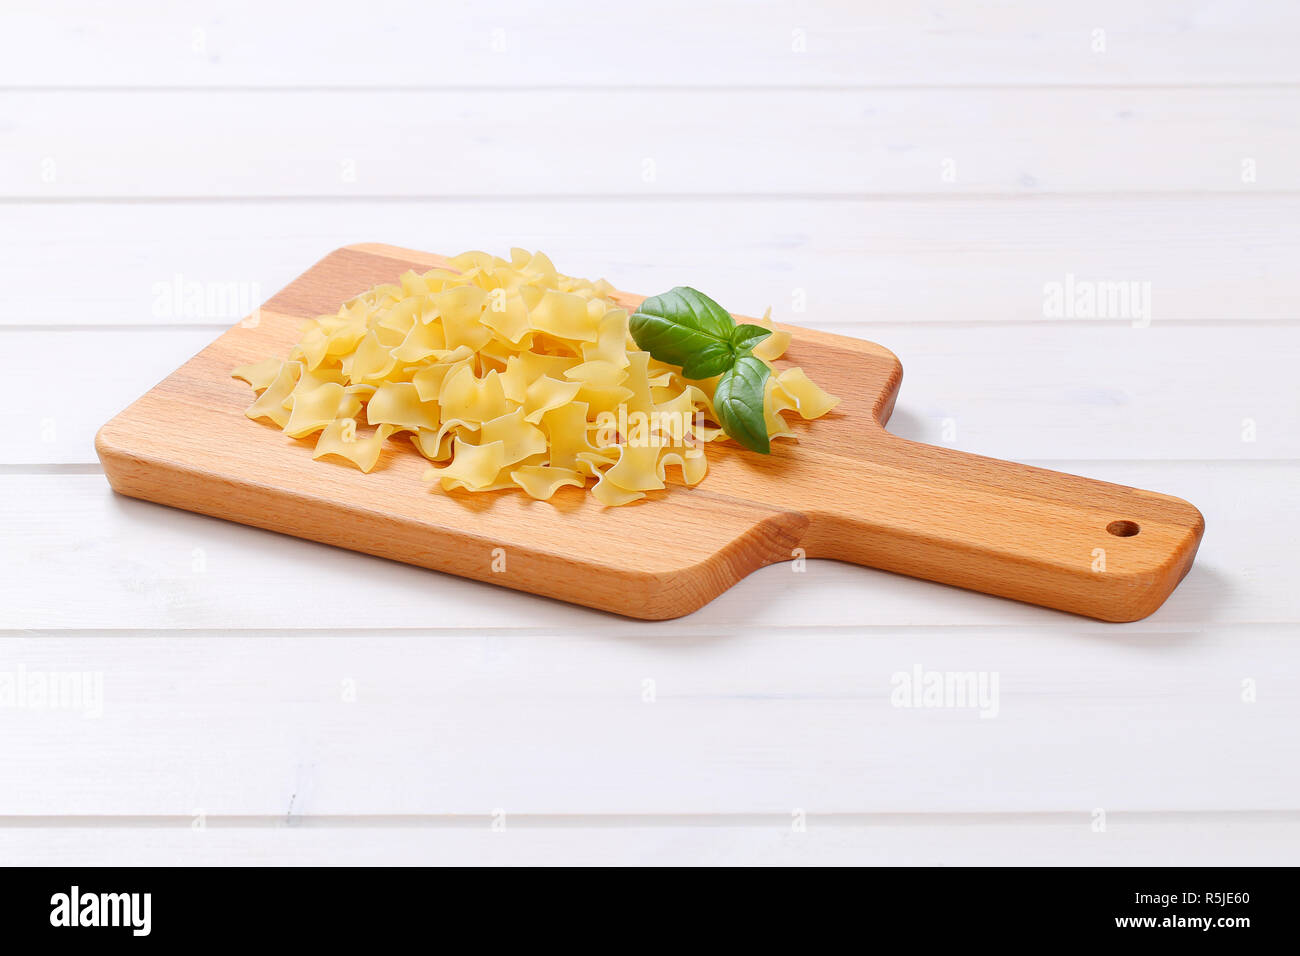 quadretti - square shaped pasta Stock Photo